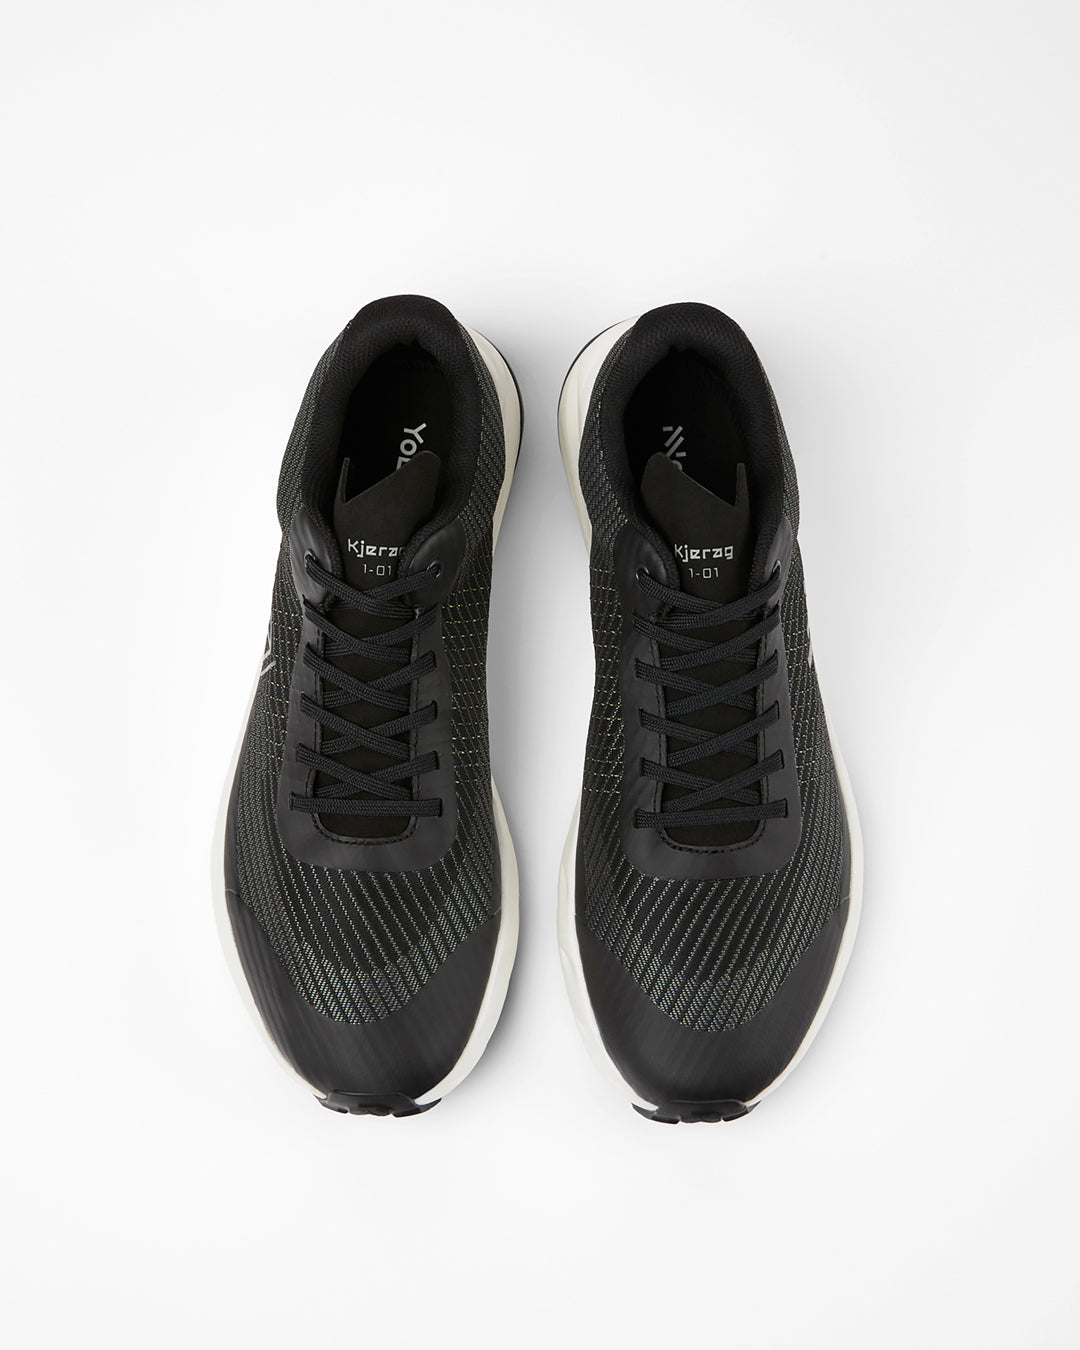 Kjerag Shoe Black/Grey